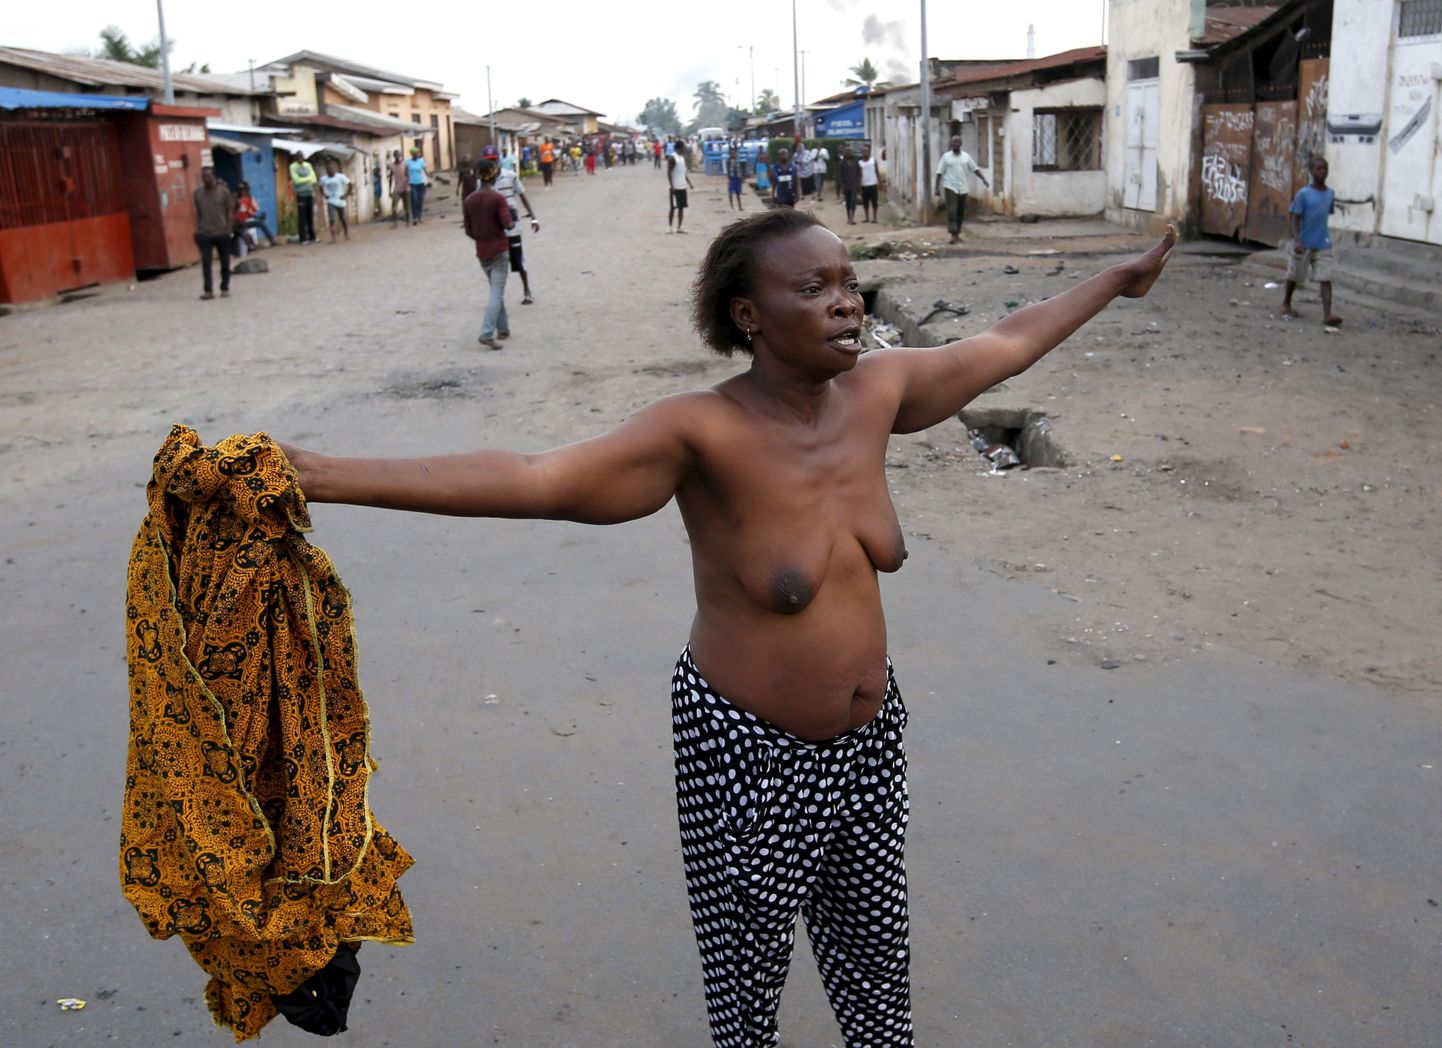 Burundi naine protestis presidendi vastu paljaste rindadega